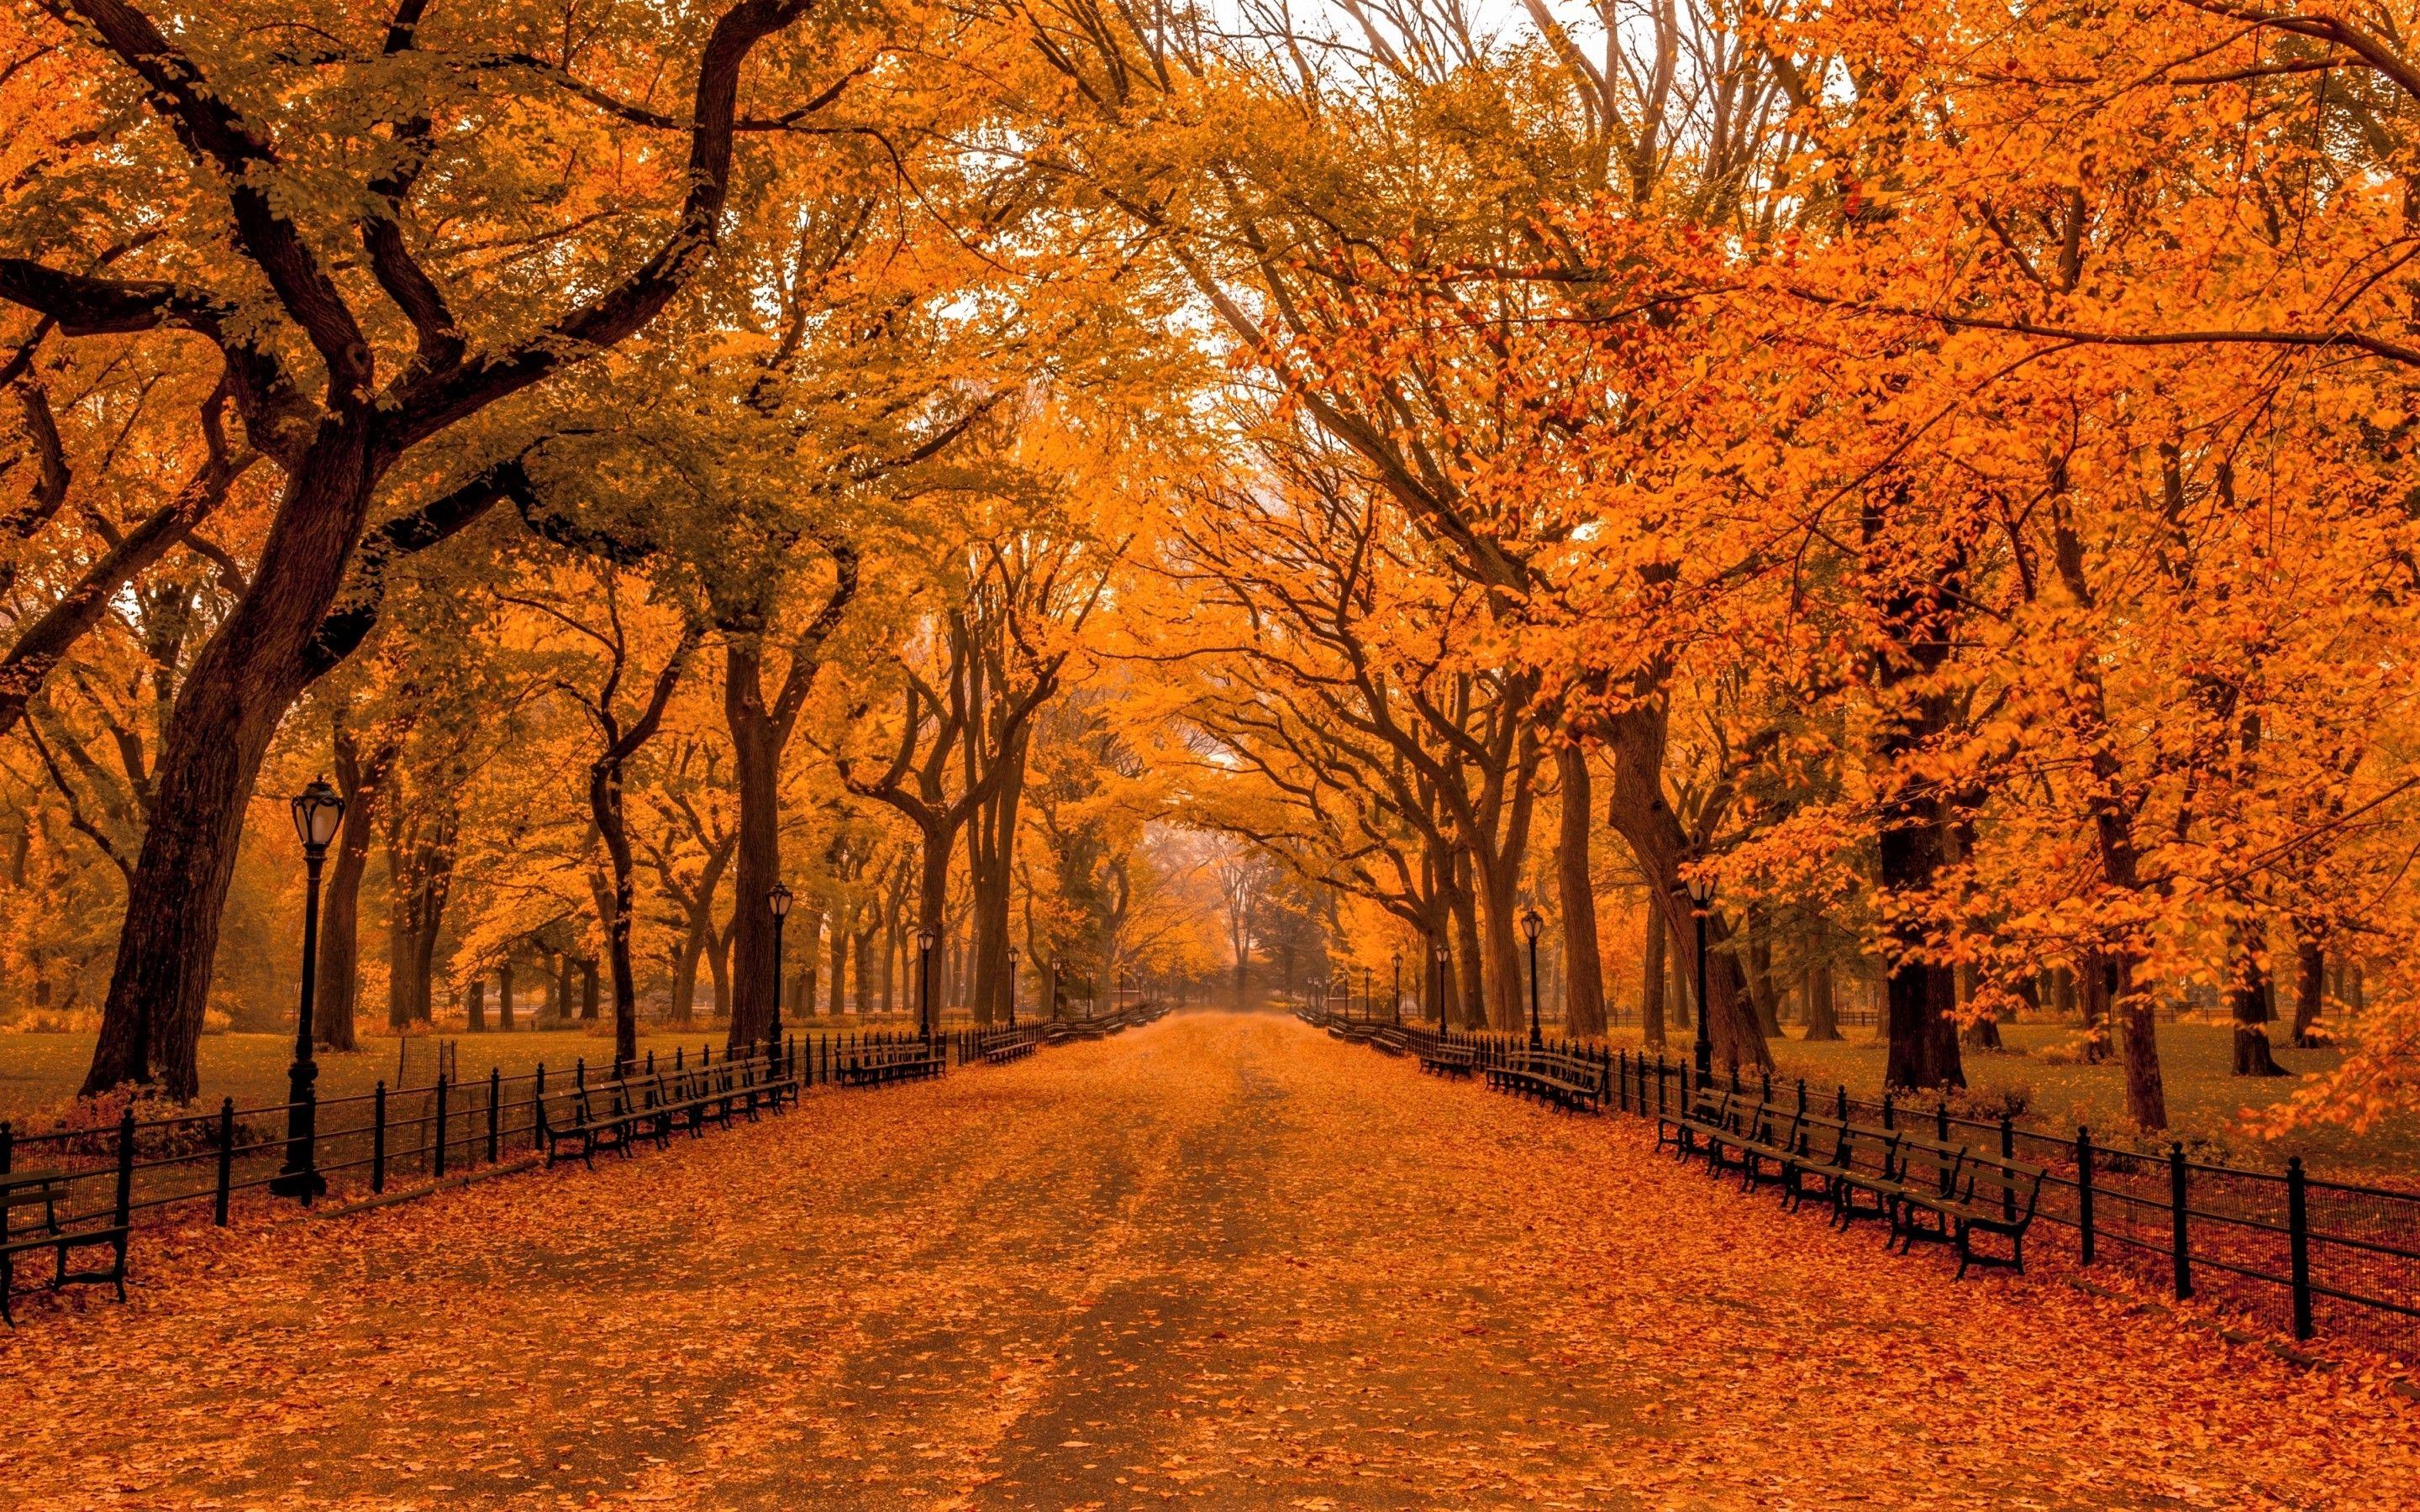 autumn in new york